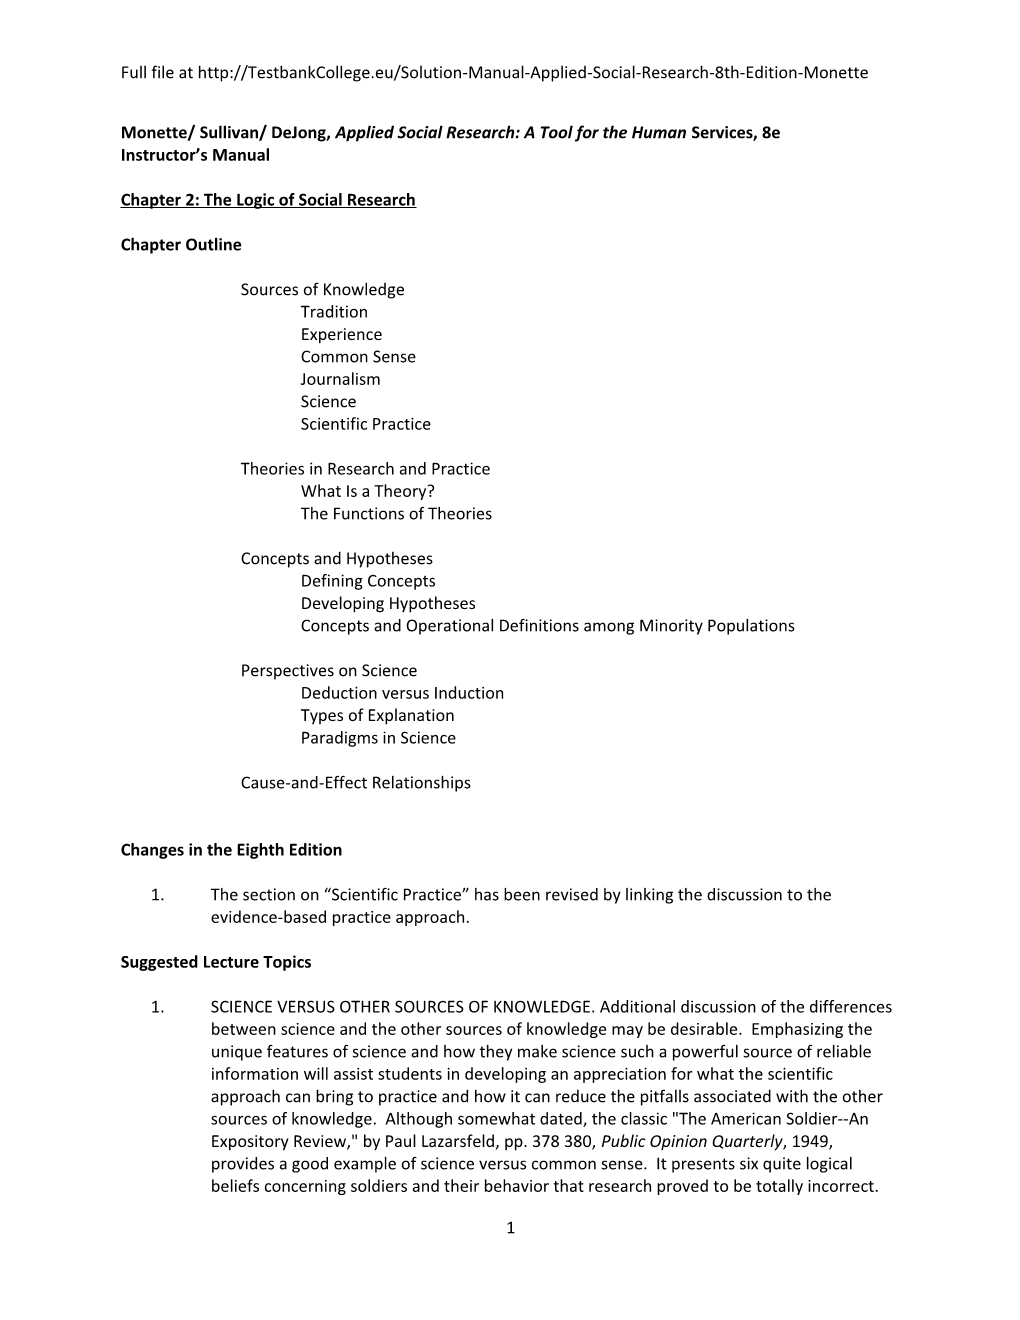 Monette/ Sullivan/ Dejong, Applied Social Research: a Tool for the Human Services, 8E